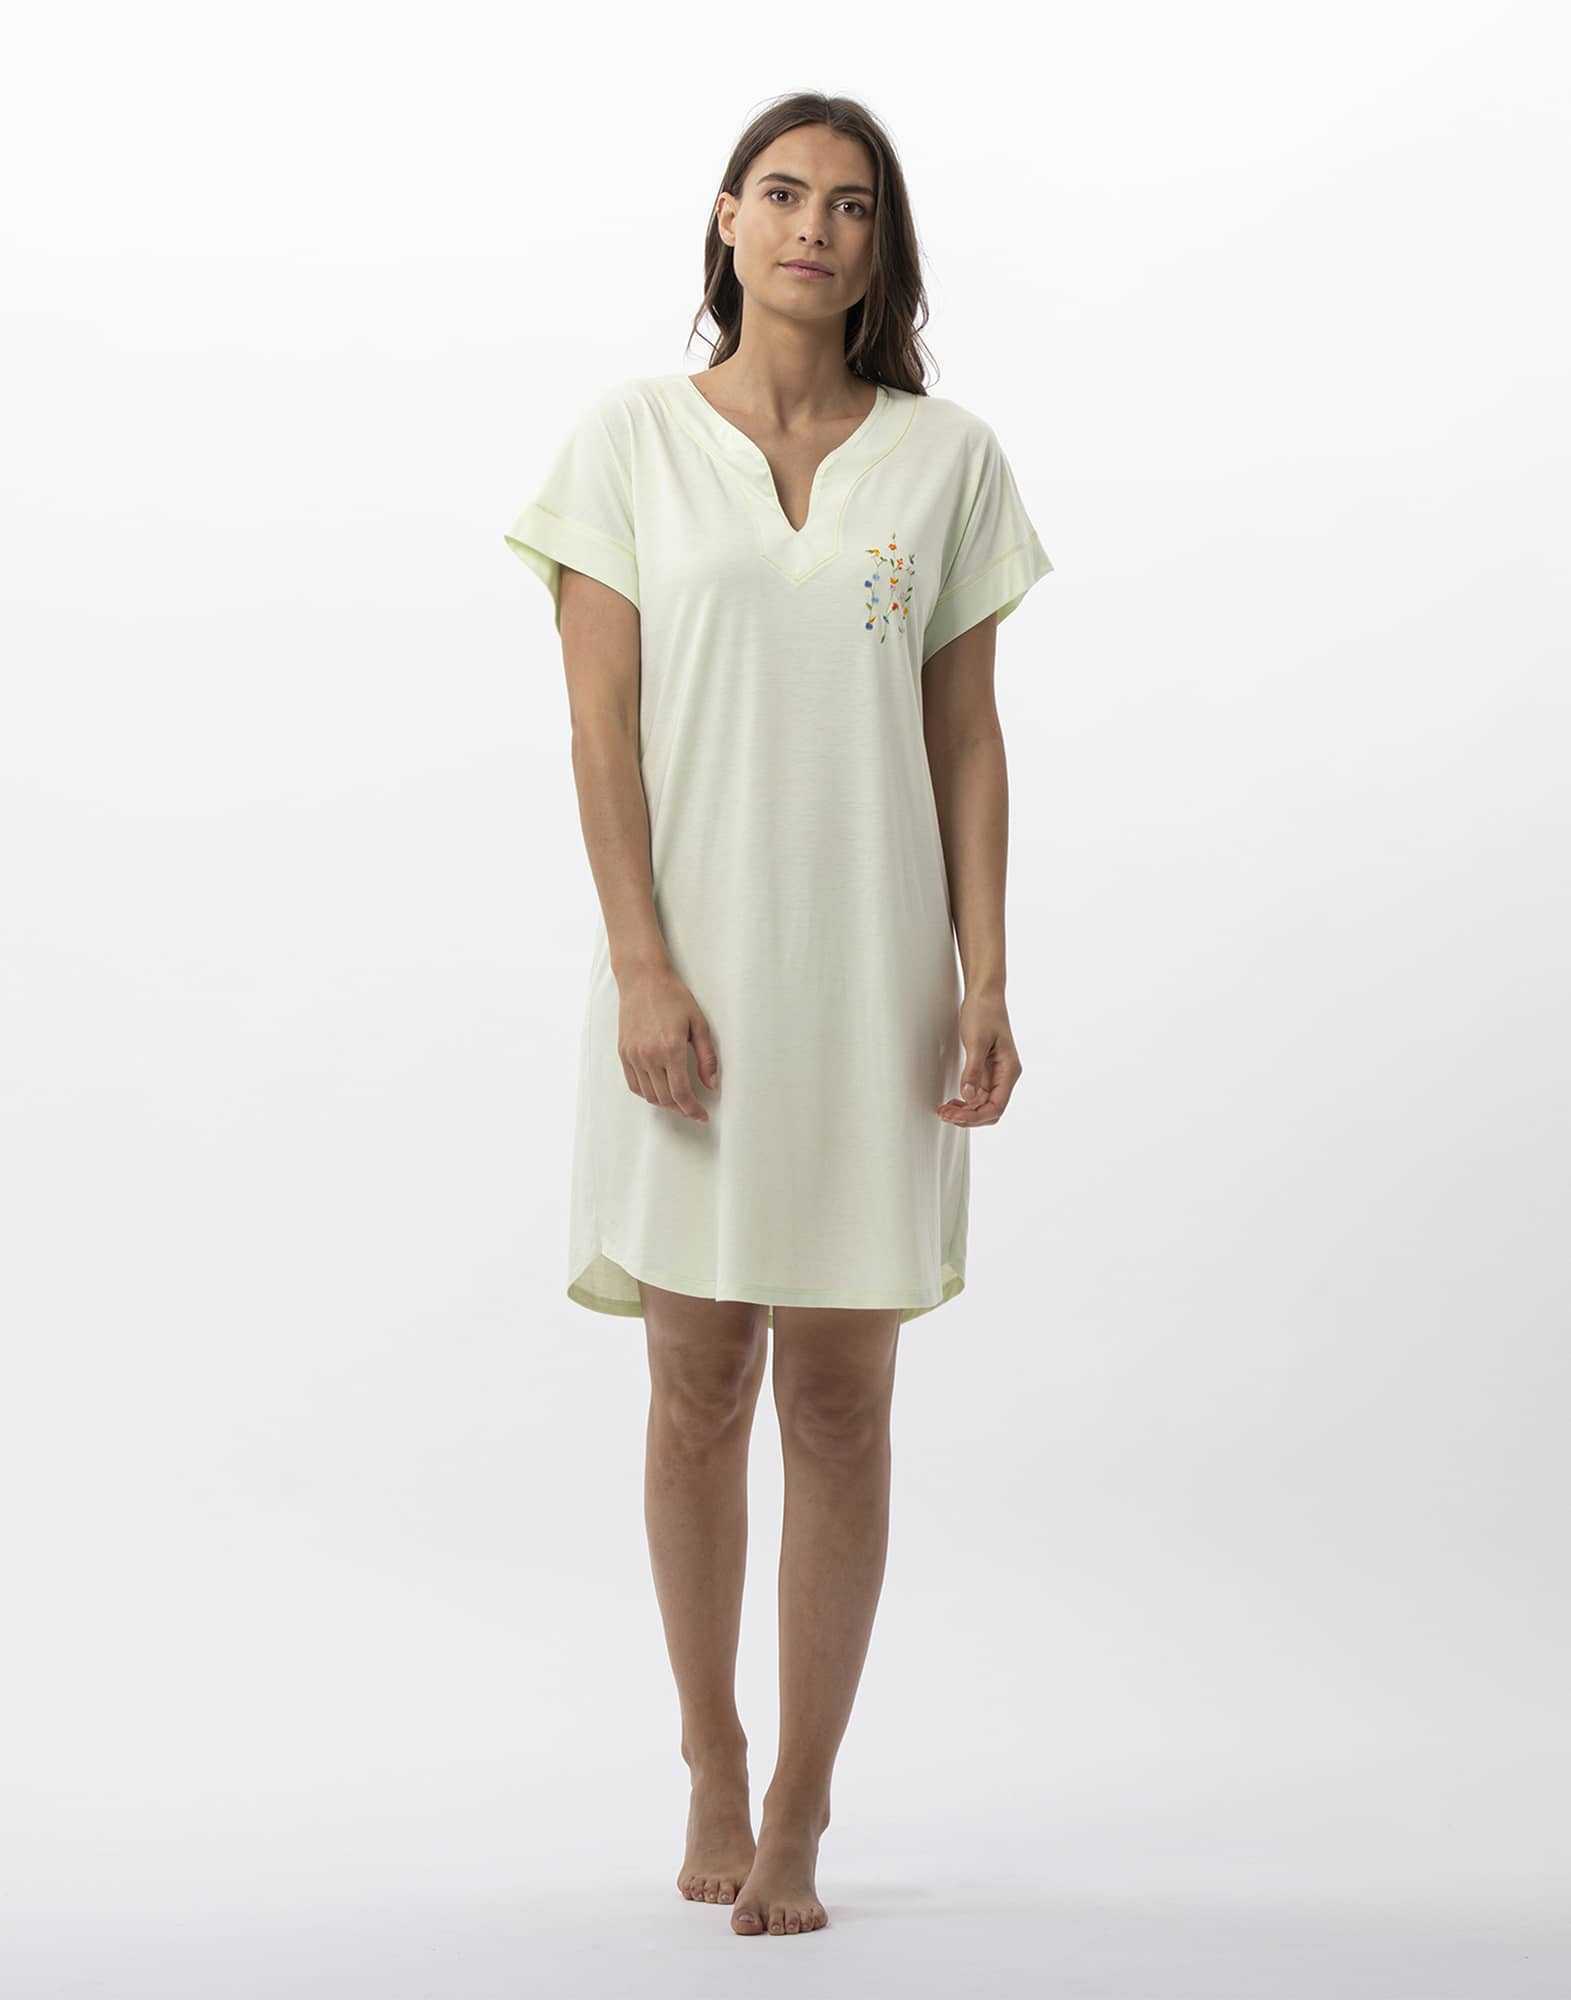 Modal Nightgown